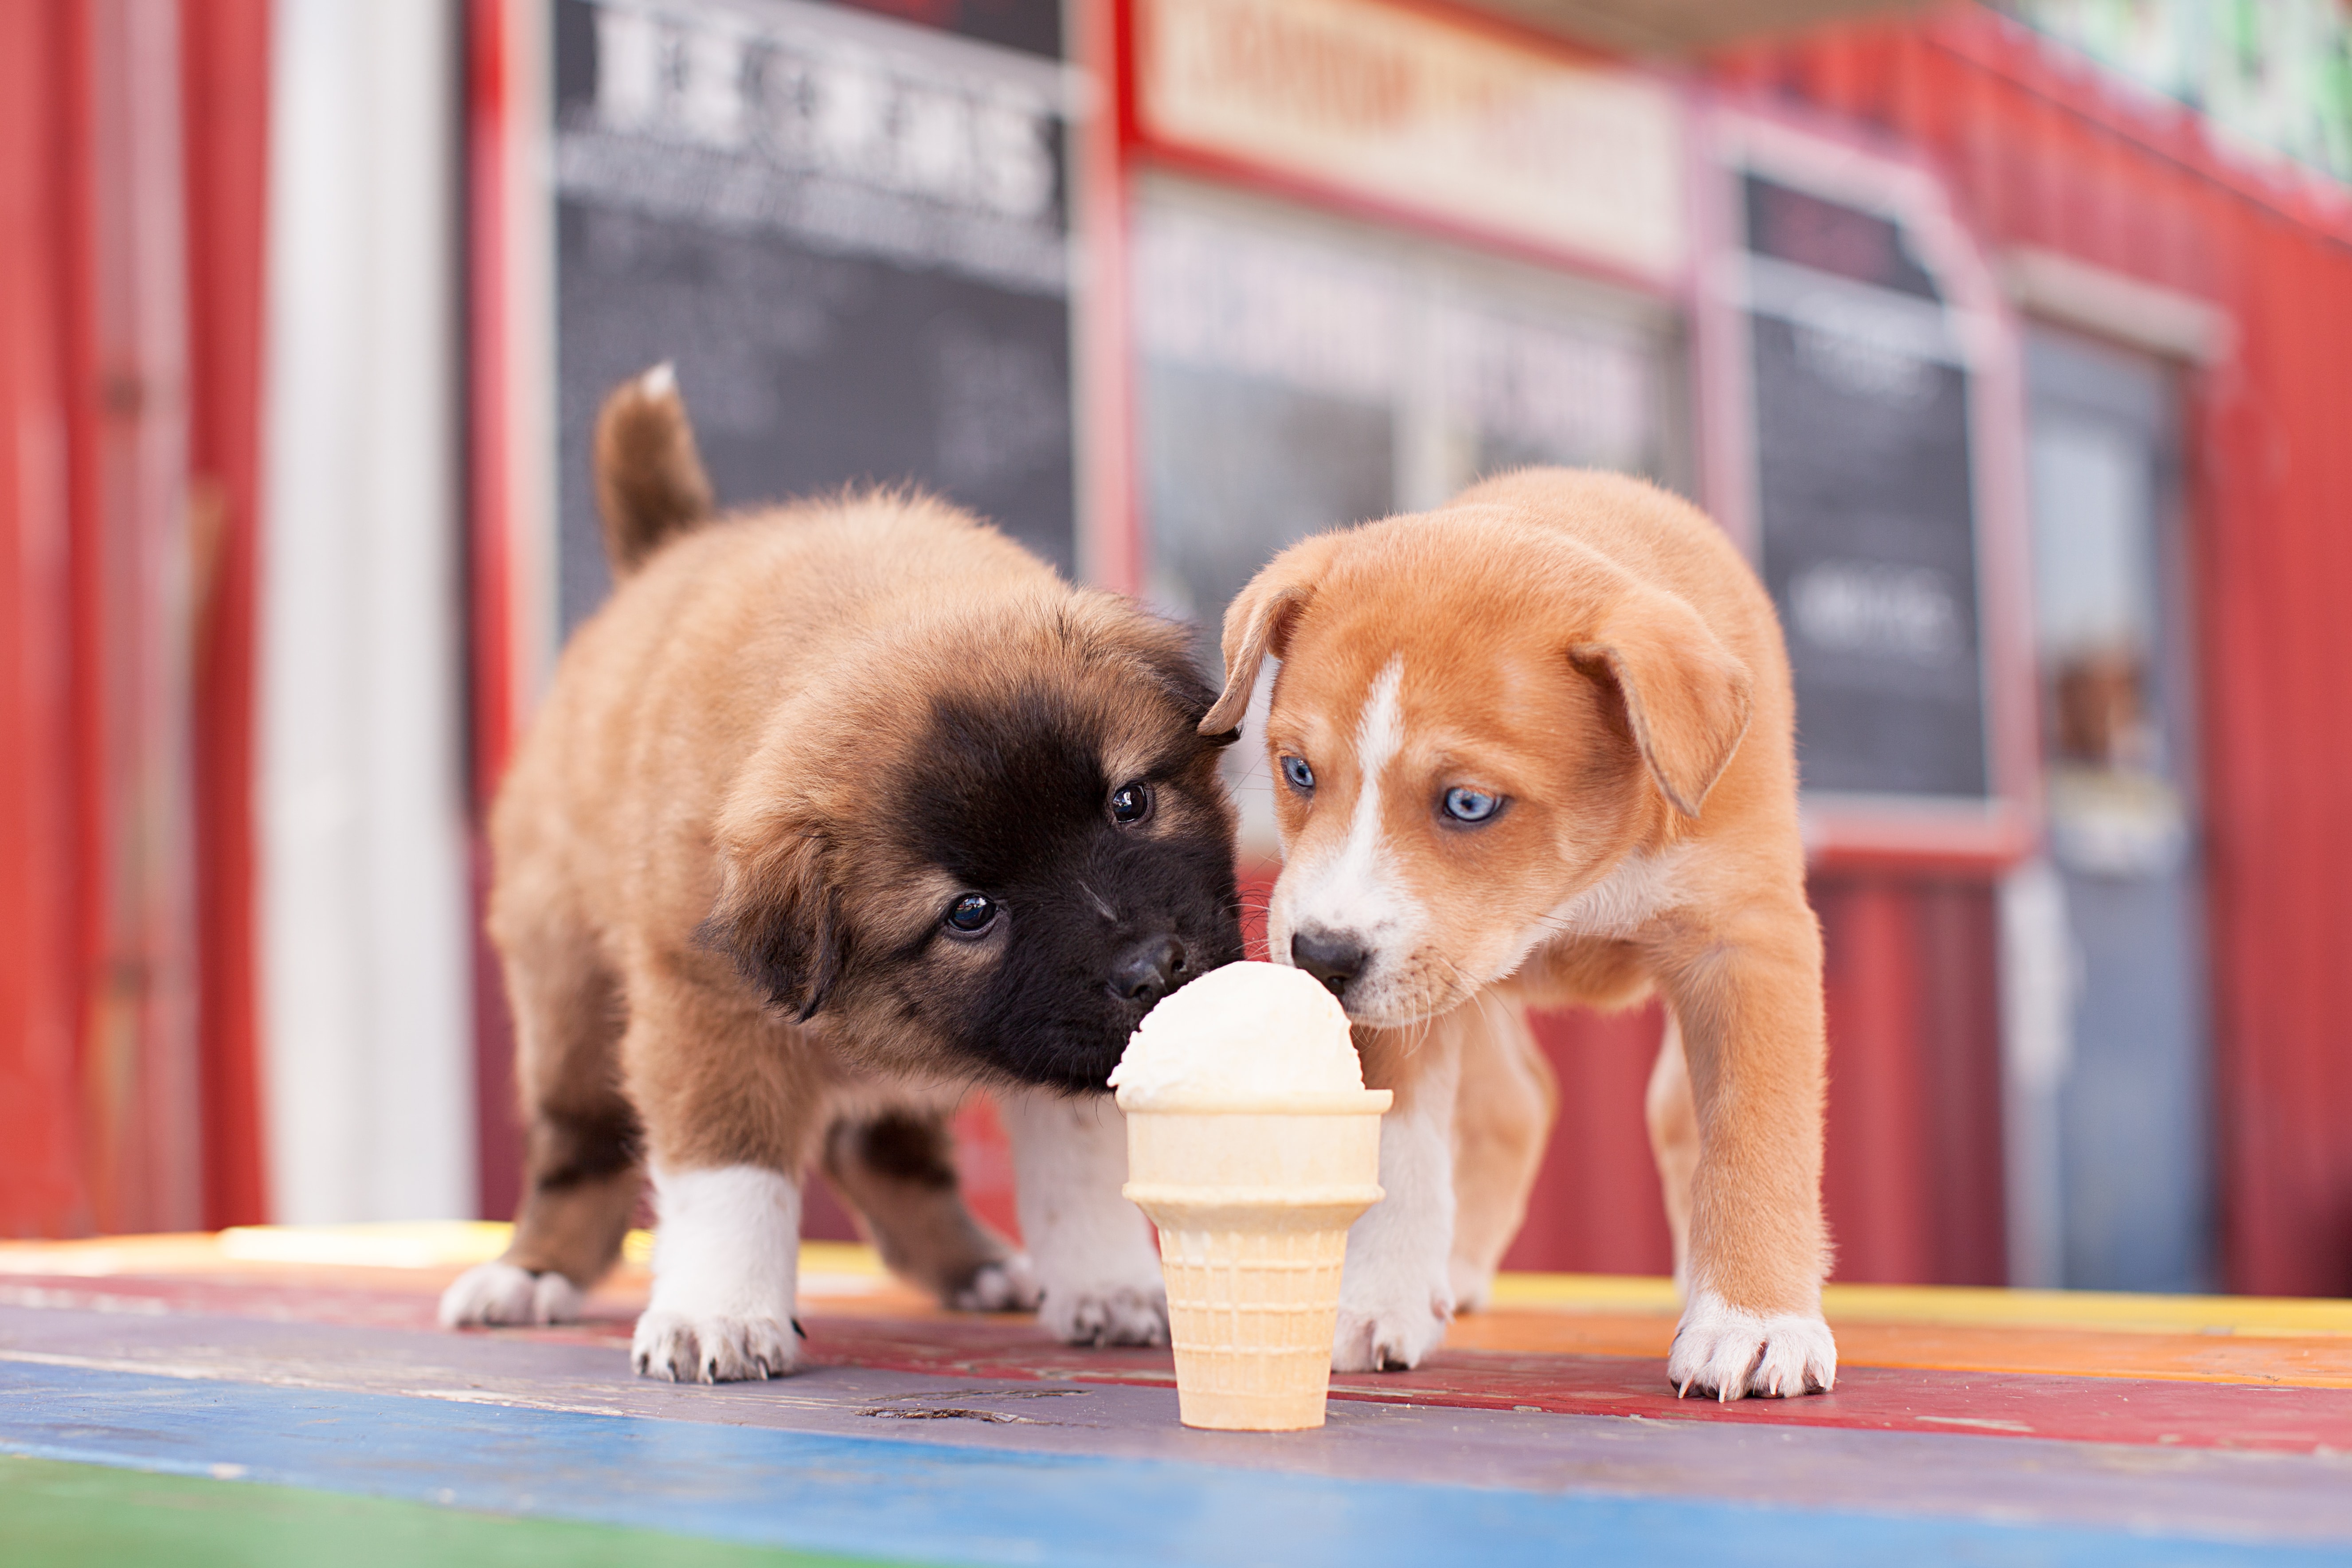 https://cdn.greenfieldpuppies.com/wp-content/uploads/2017/08/ice-cream-for-dogs-puppies-sharing-ice-cream-cone.jpg